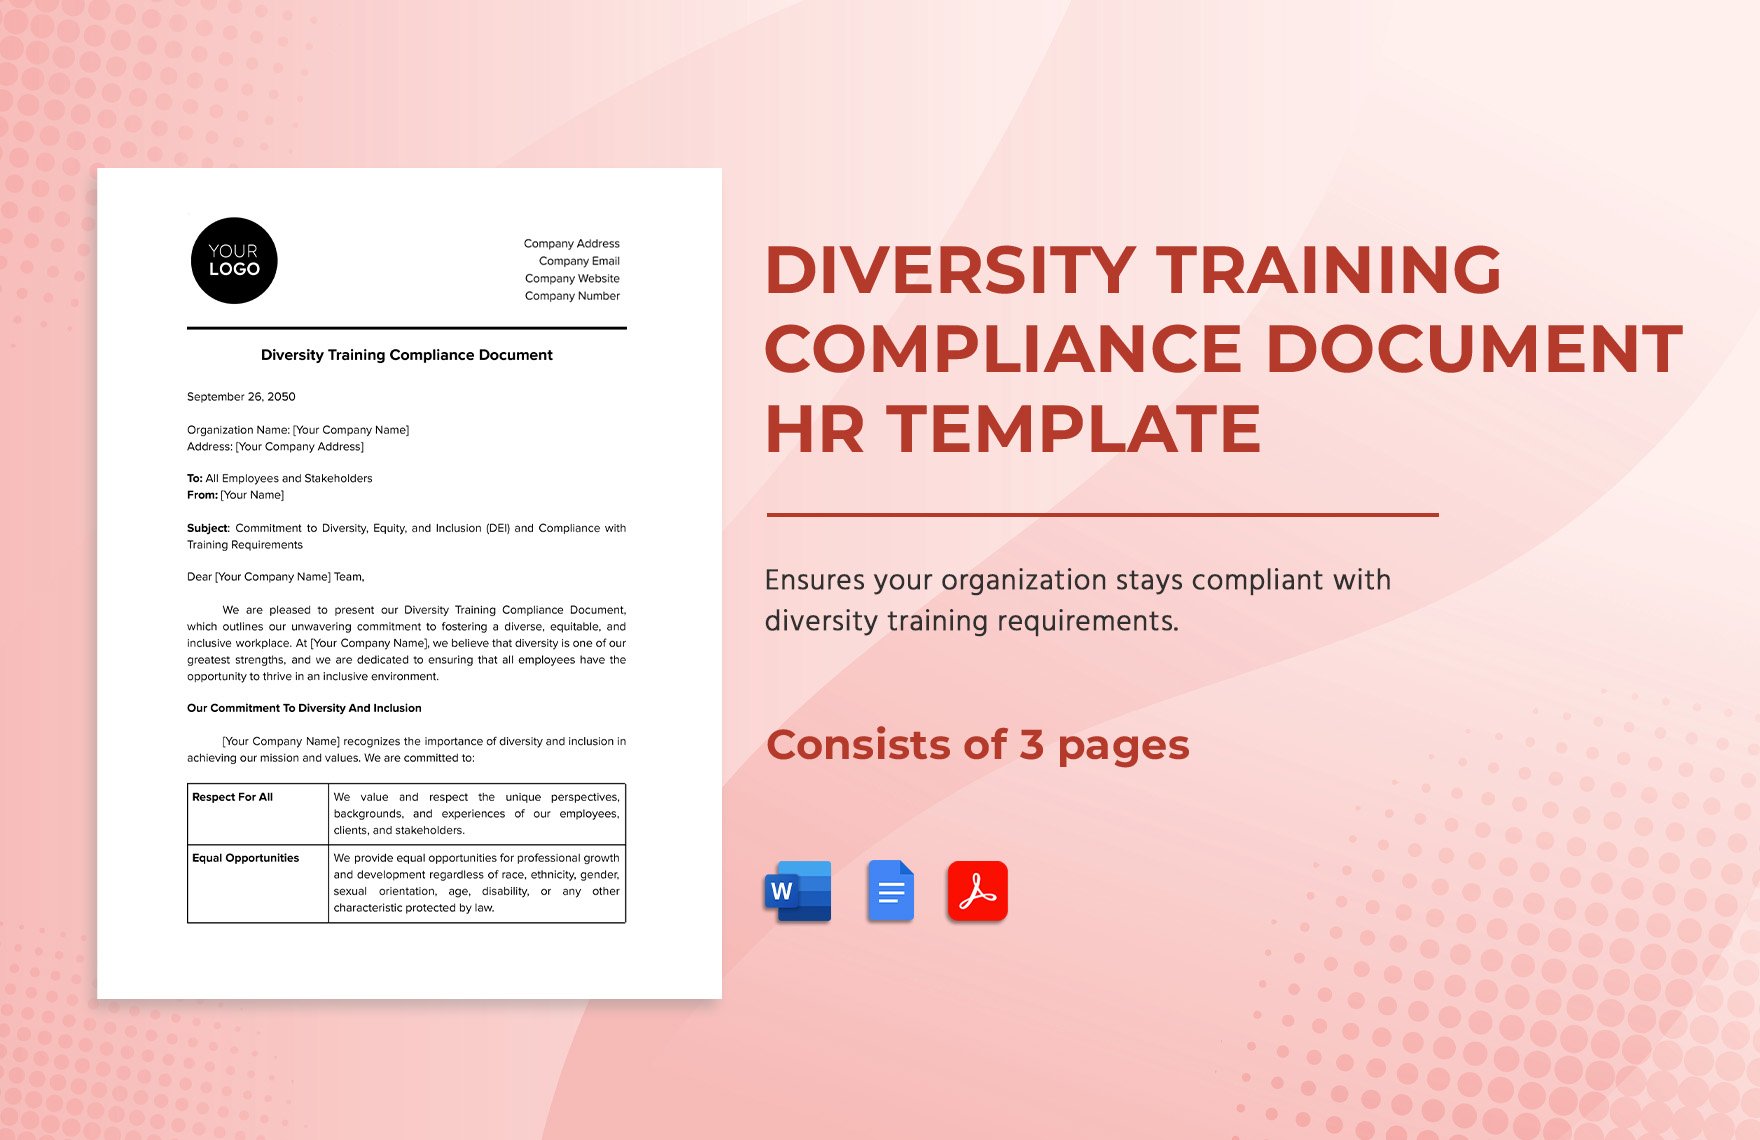 Diversity Training Compliance Document HR Template